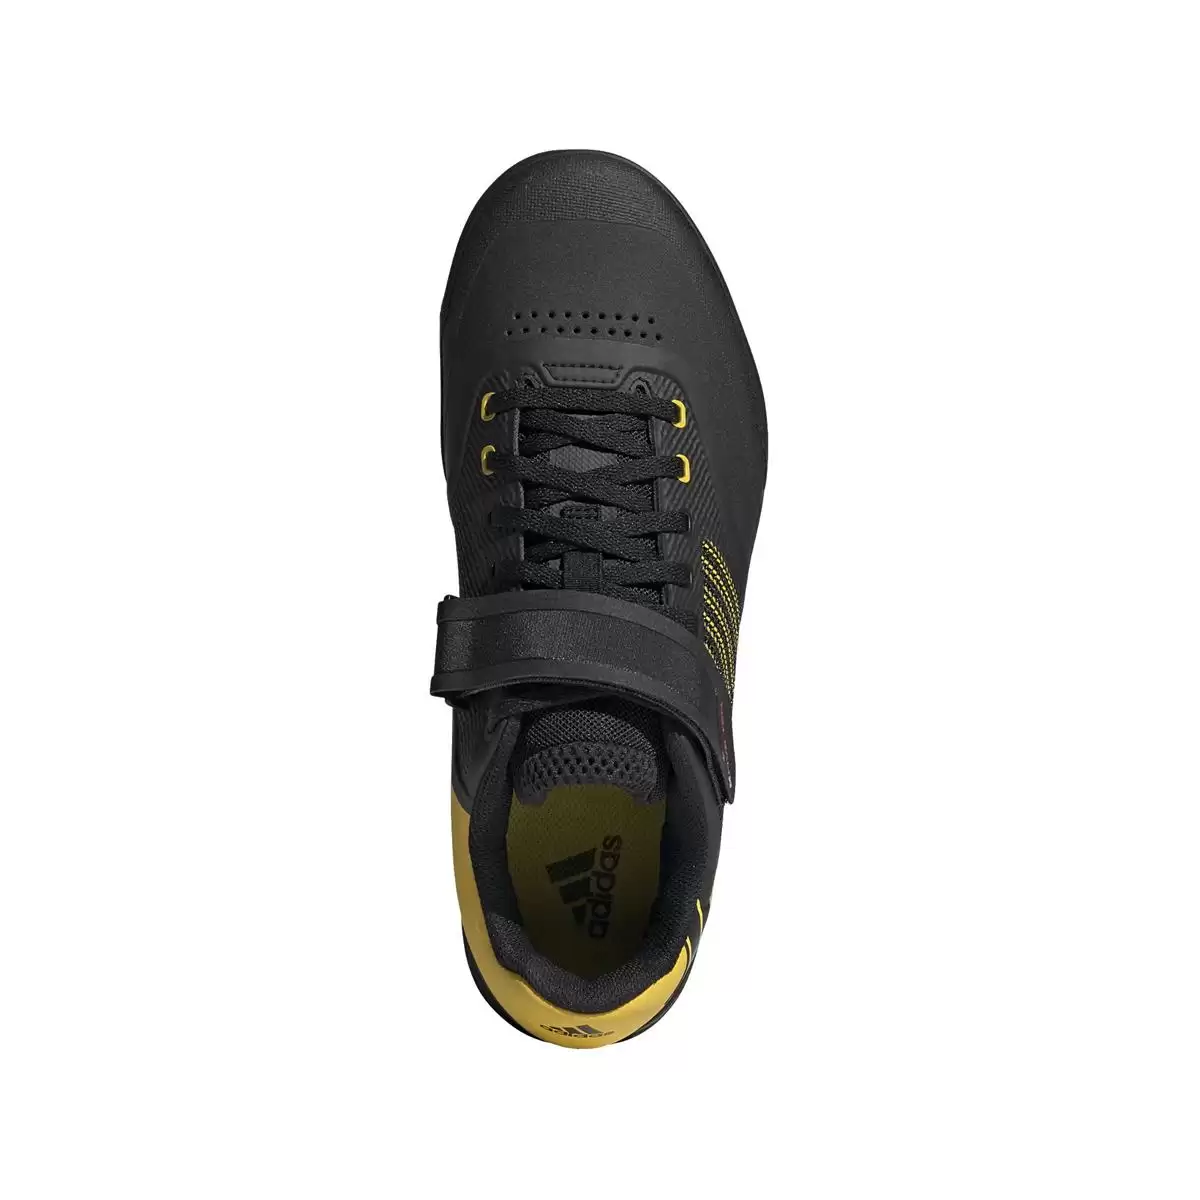 MTB Shoes Hellcat Pro Black/Yellow Size 36 #4